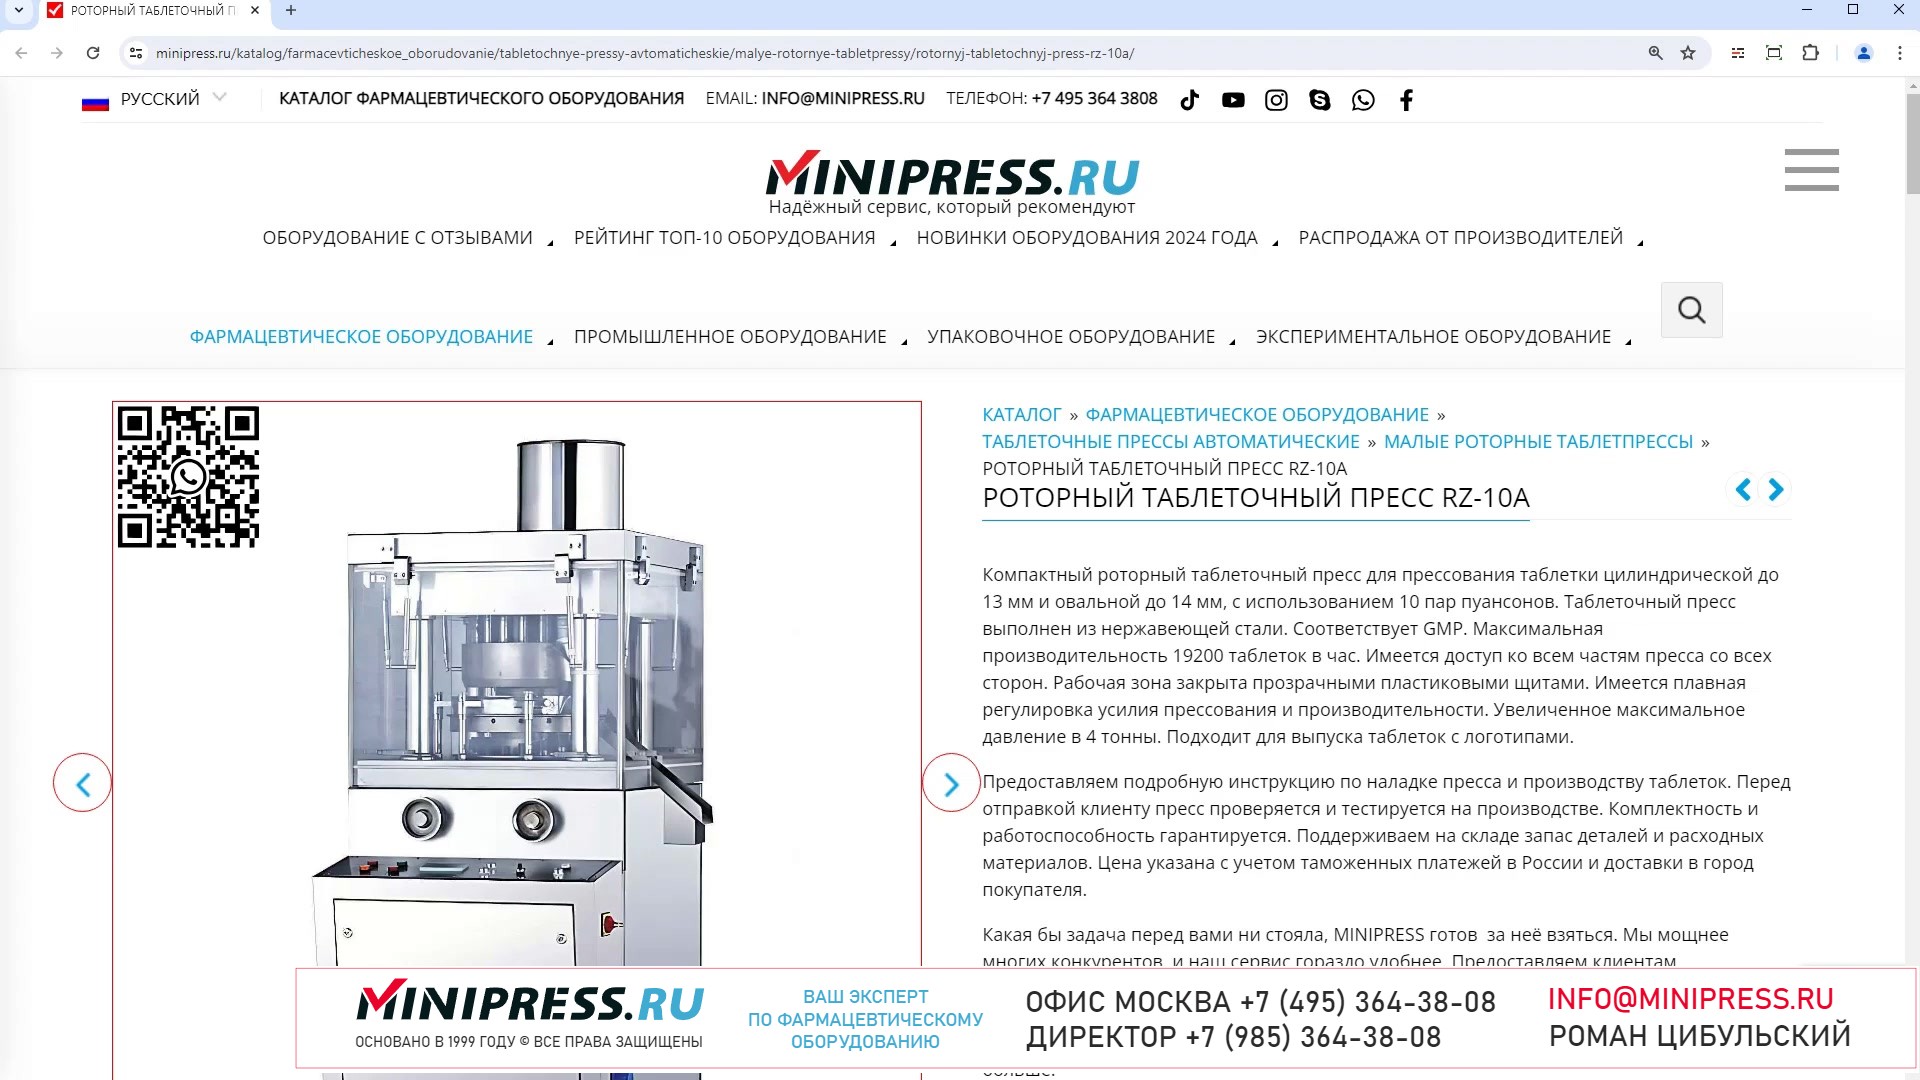 Minipress.ru Роторный таблеточный пресс RZ-10A